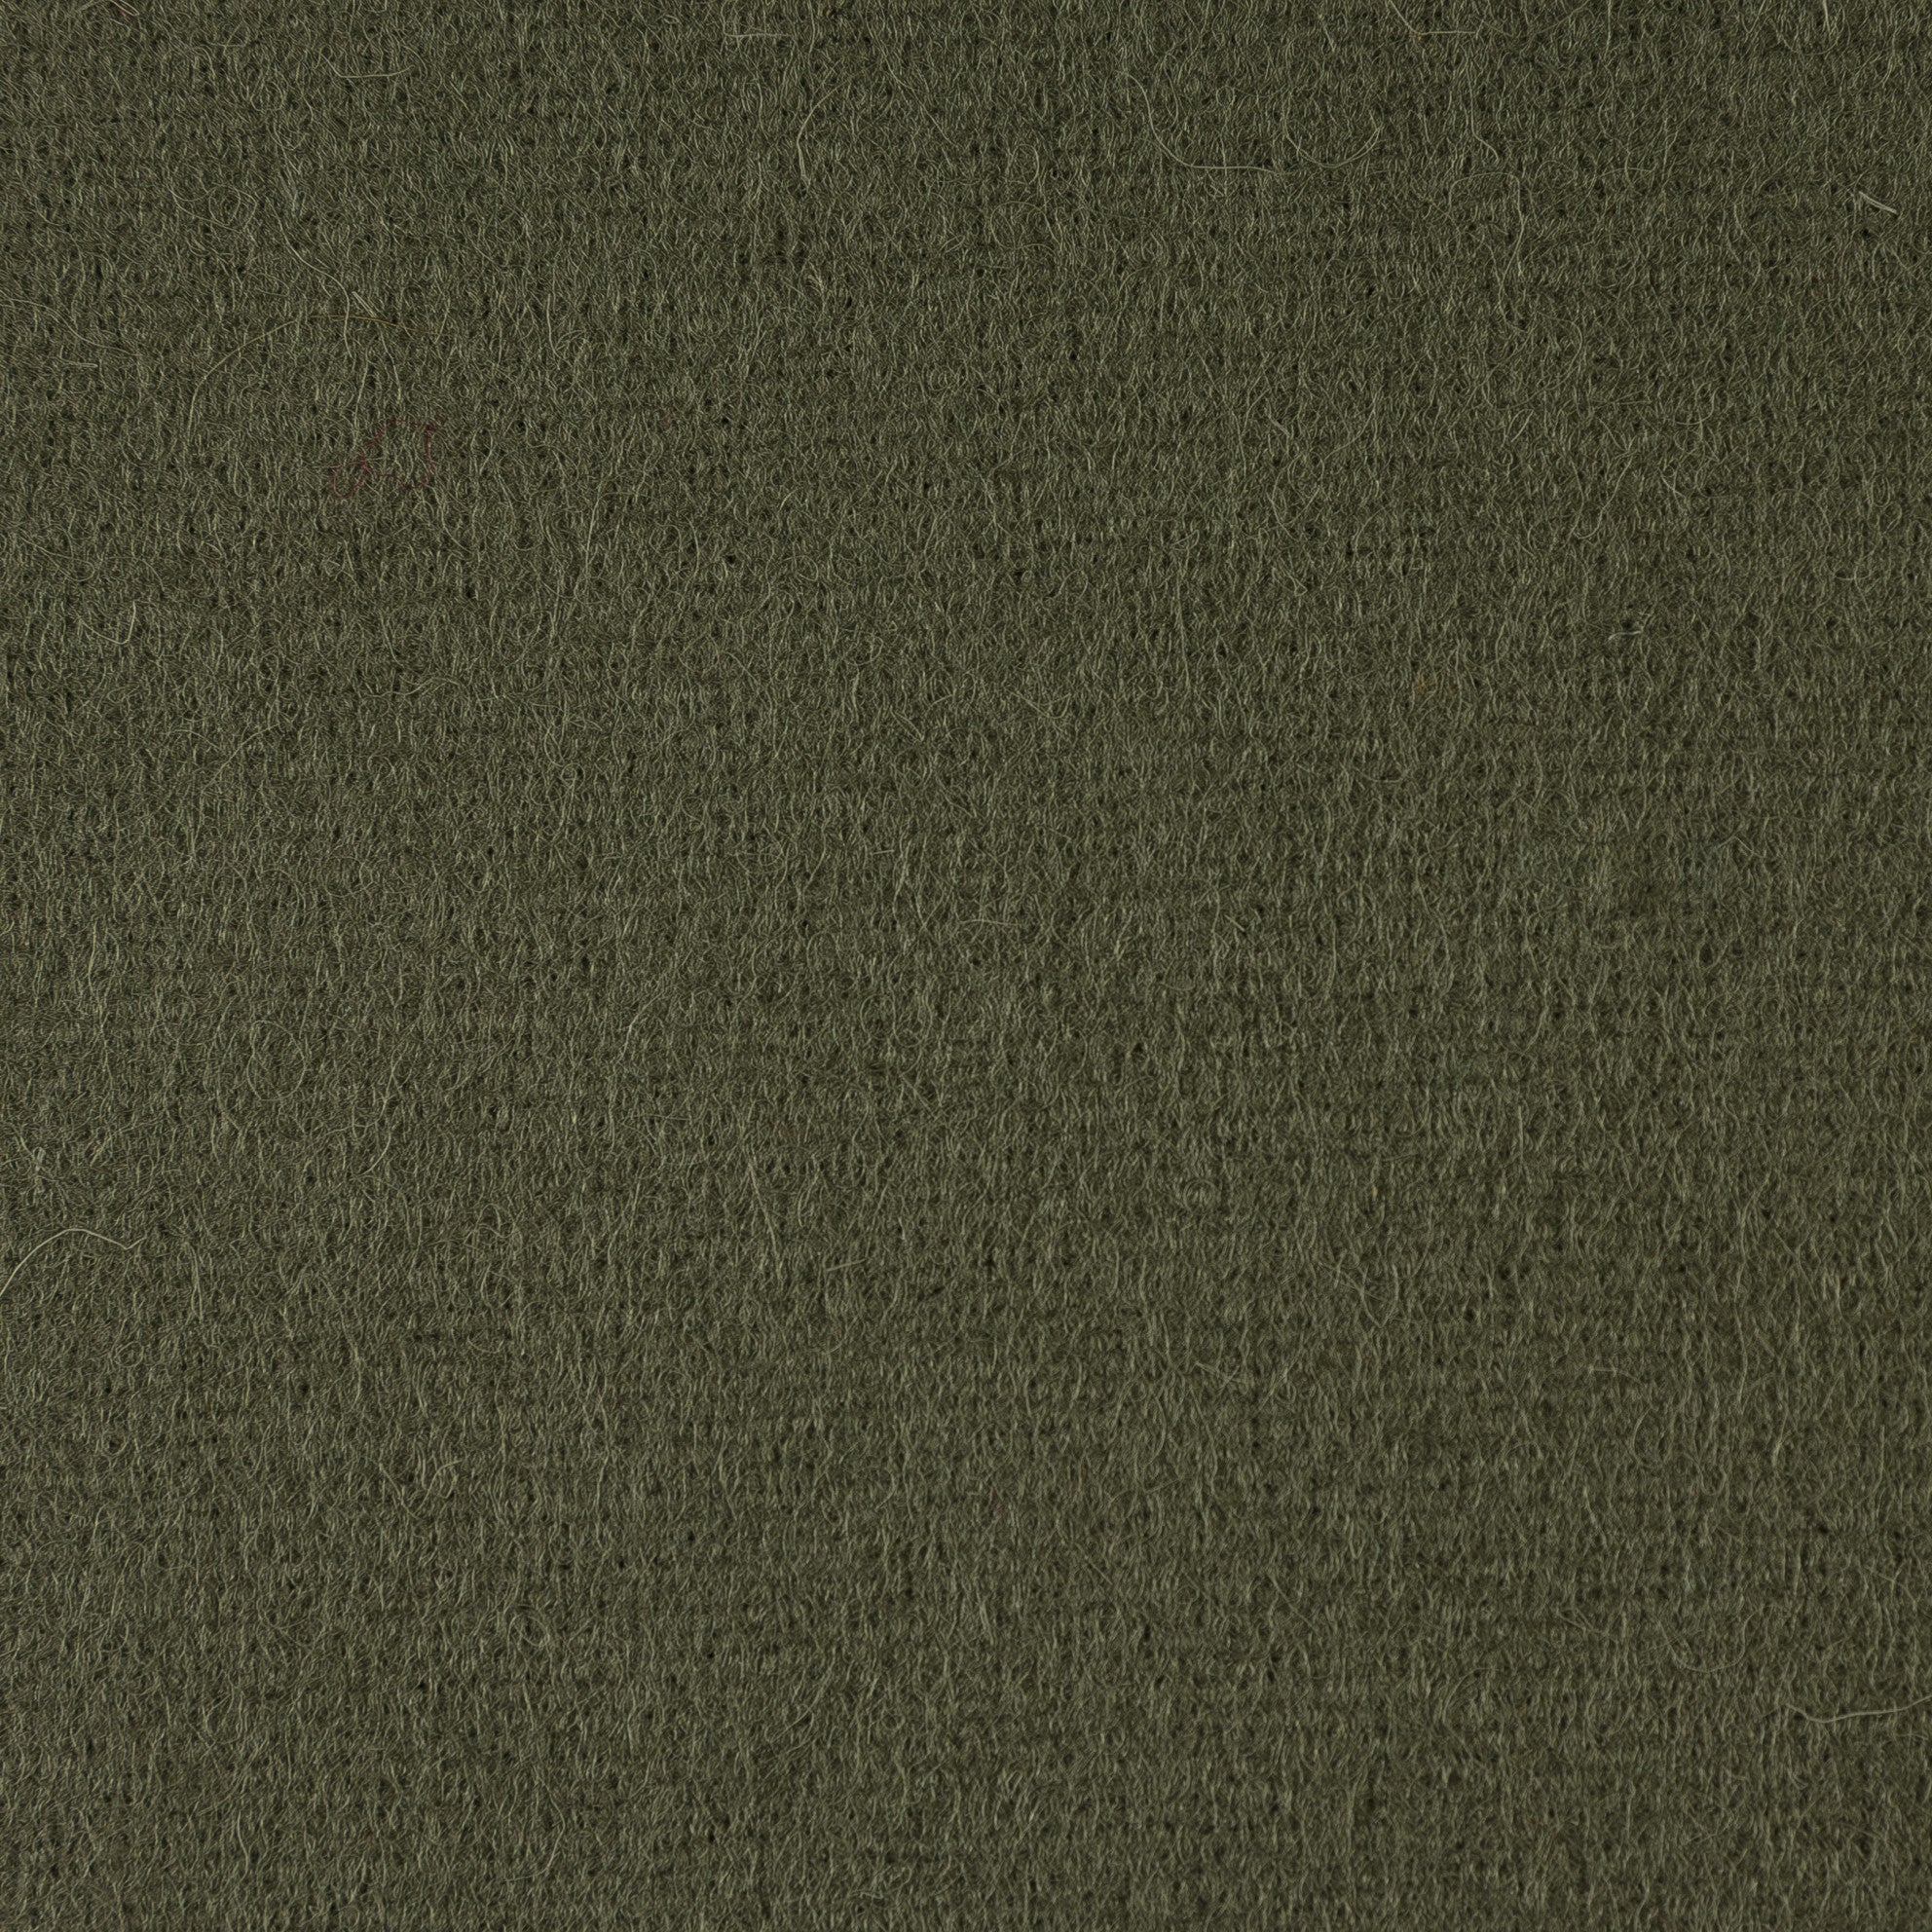 Woven Plain Fabric - Dawlish 19/064 Grey Green | Nicholas Engert Interiors